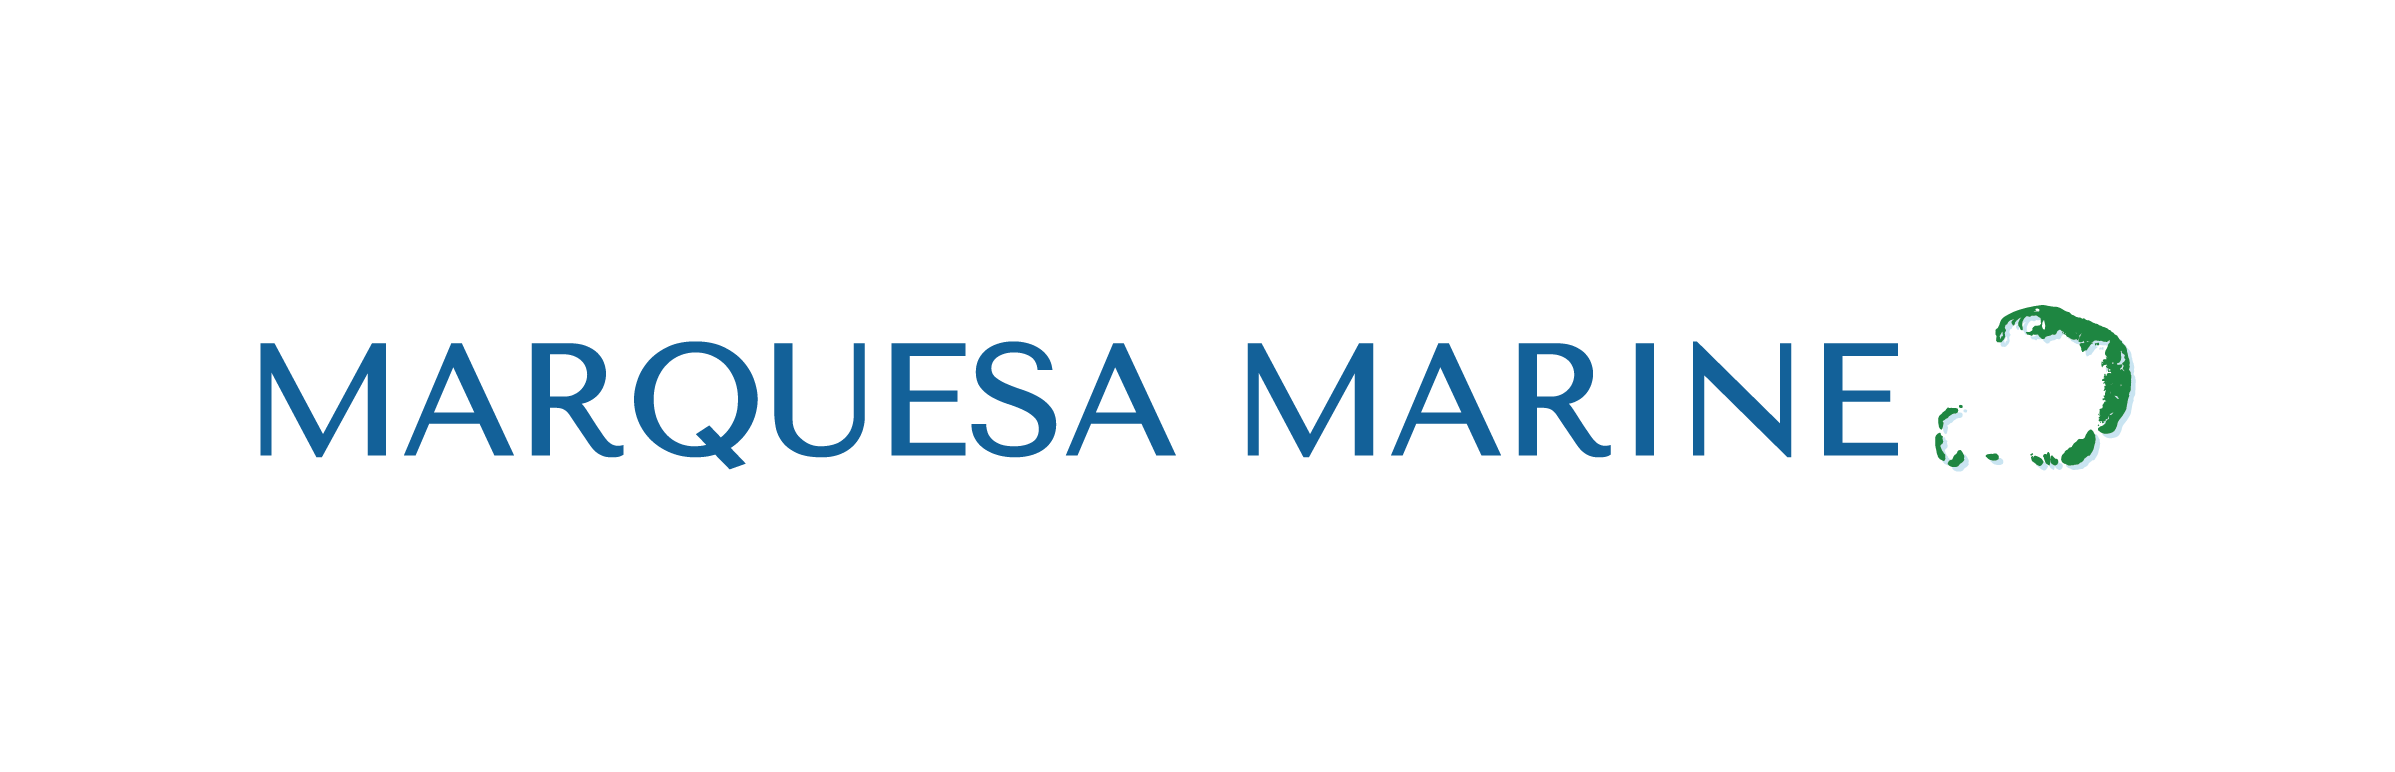 Marquesa Marine